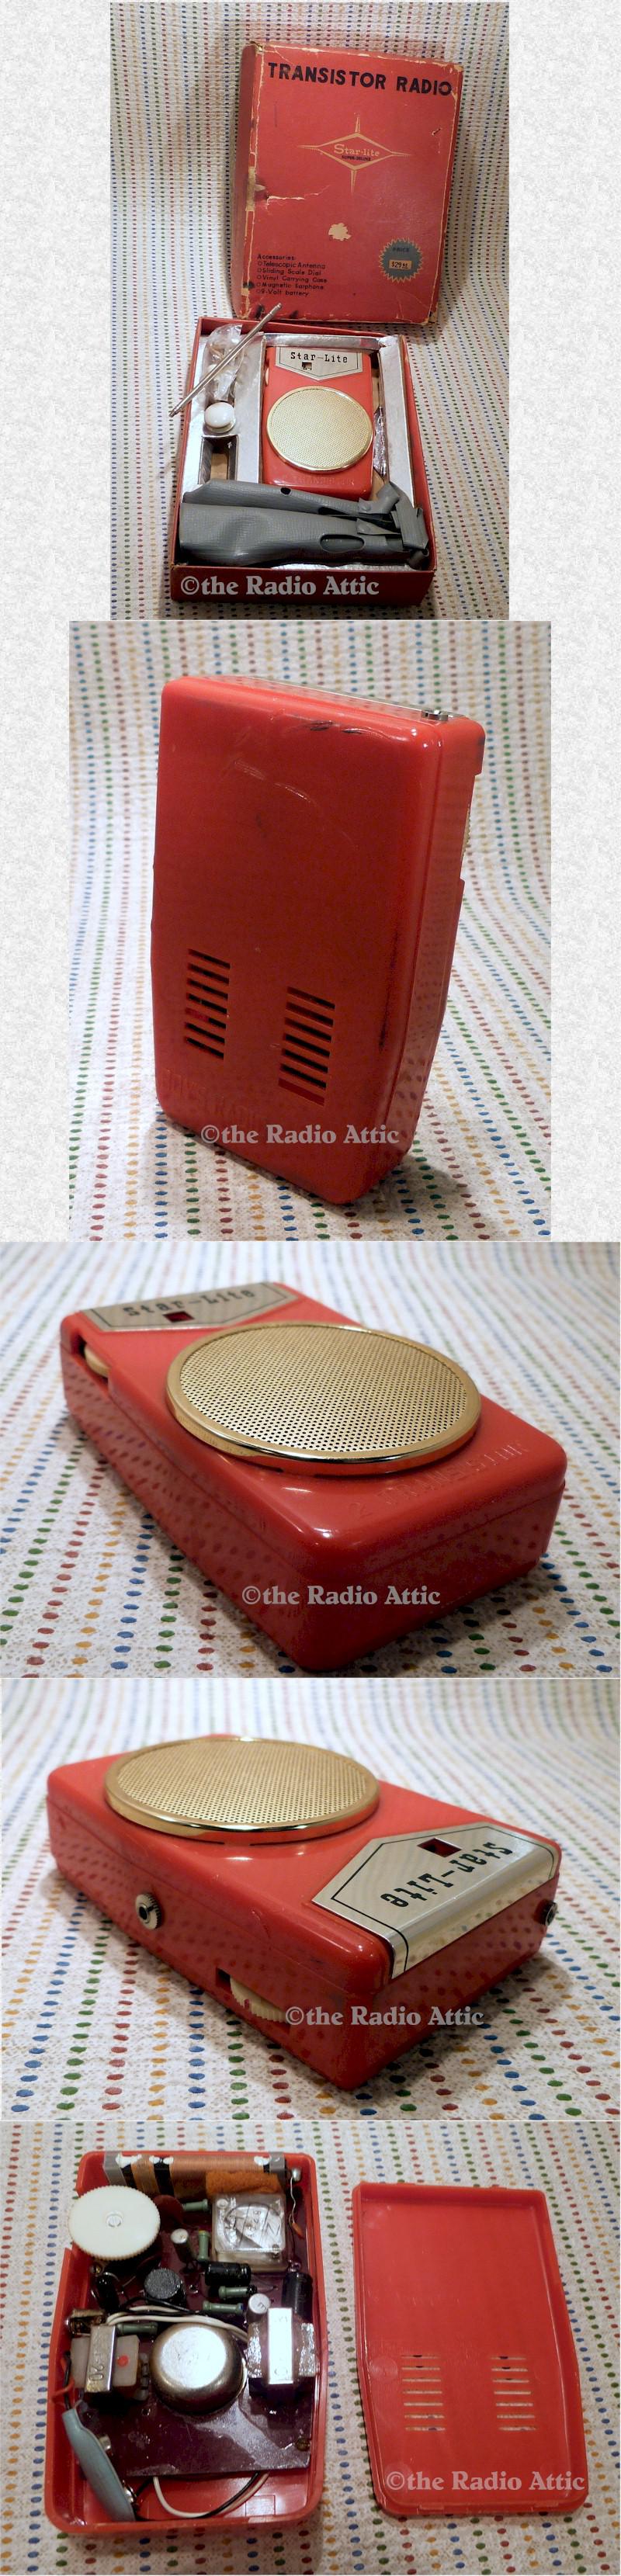 Star-Lite TR-24 Boy's Radio